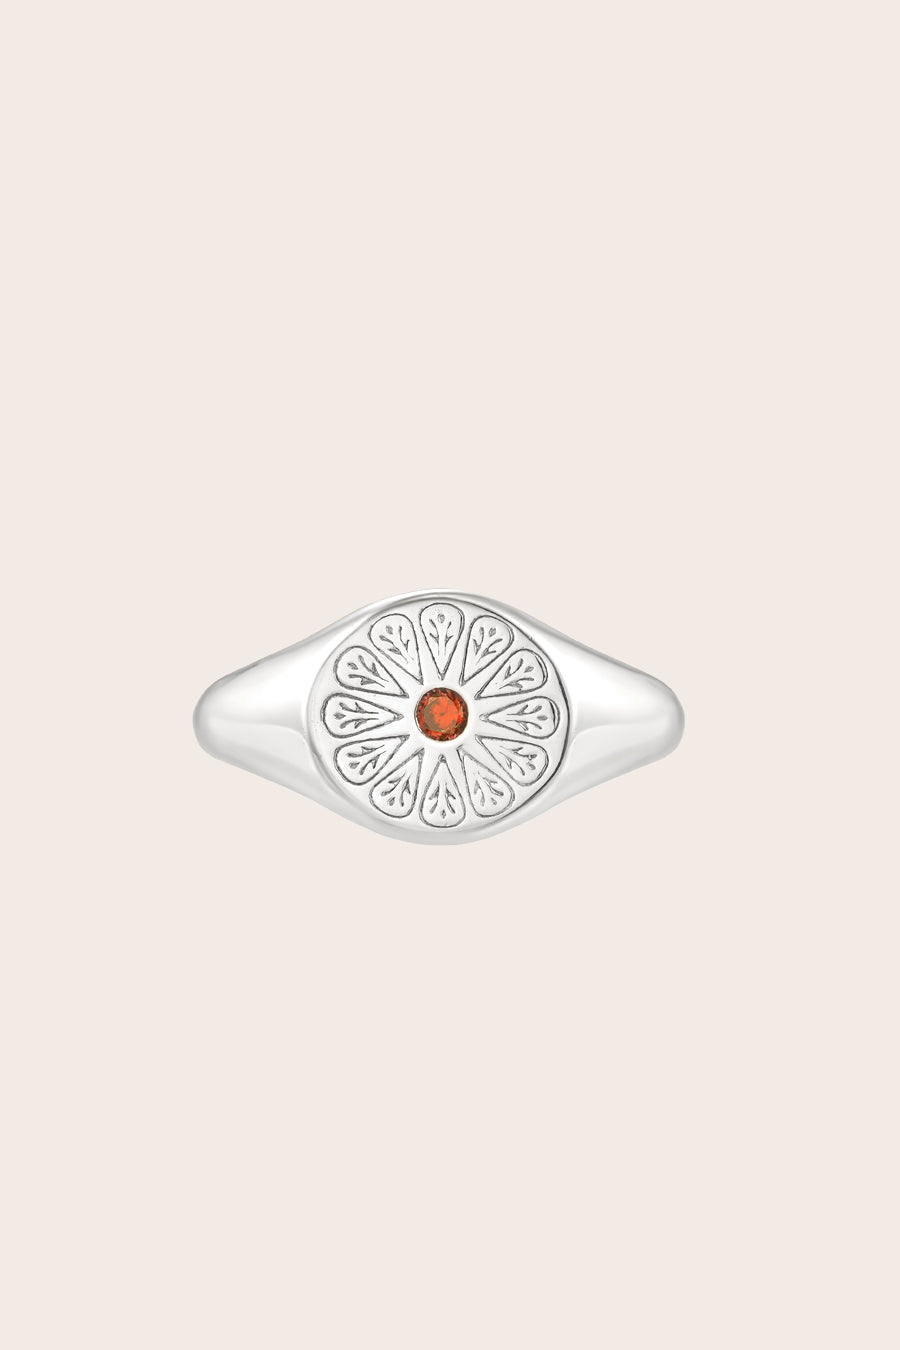 Silver January Garnet Signet Birthstone Ring on cream background